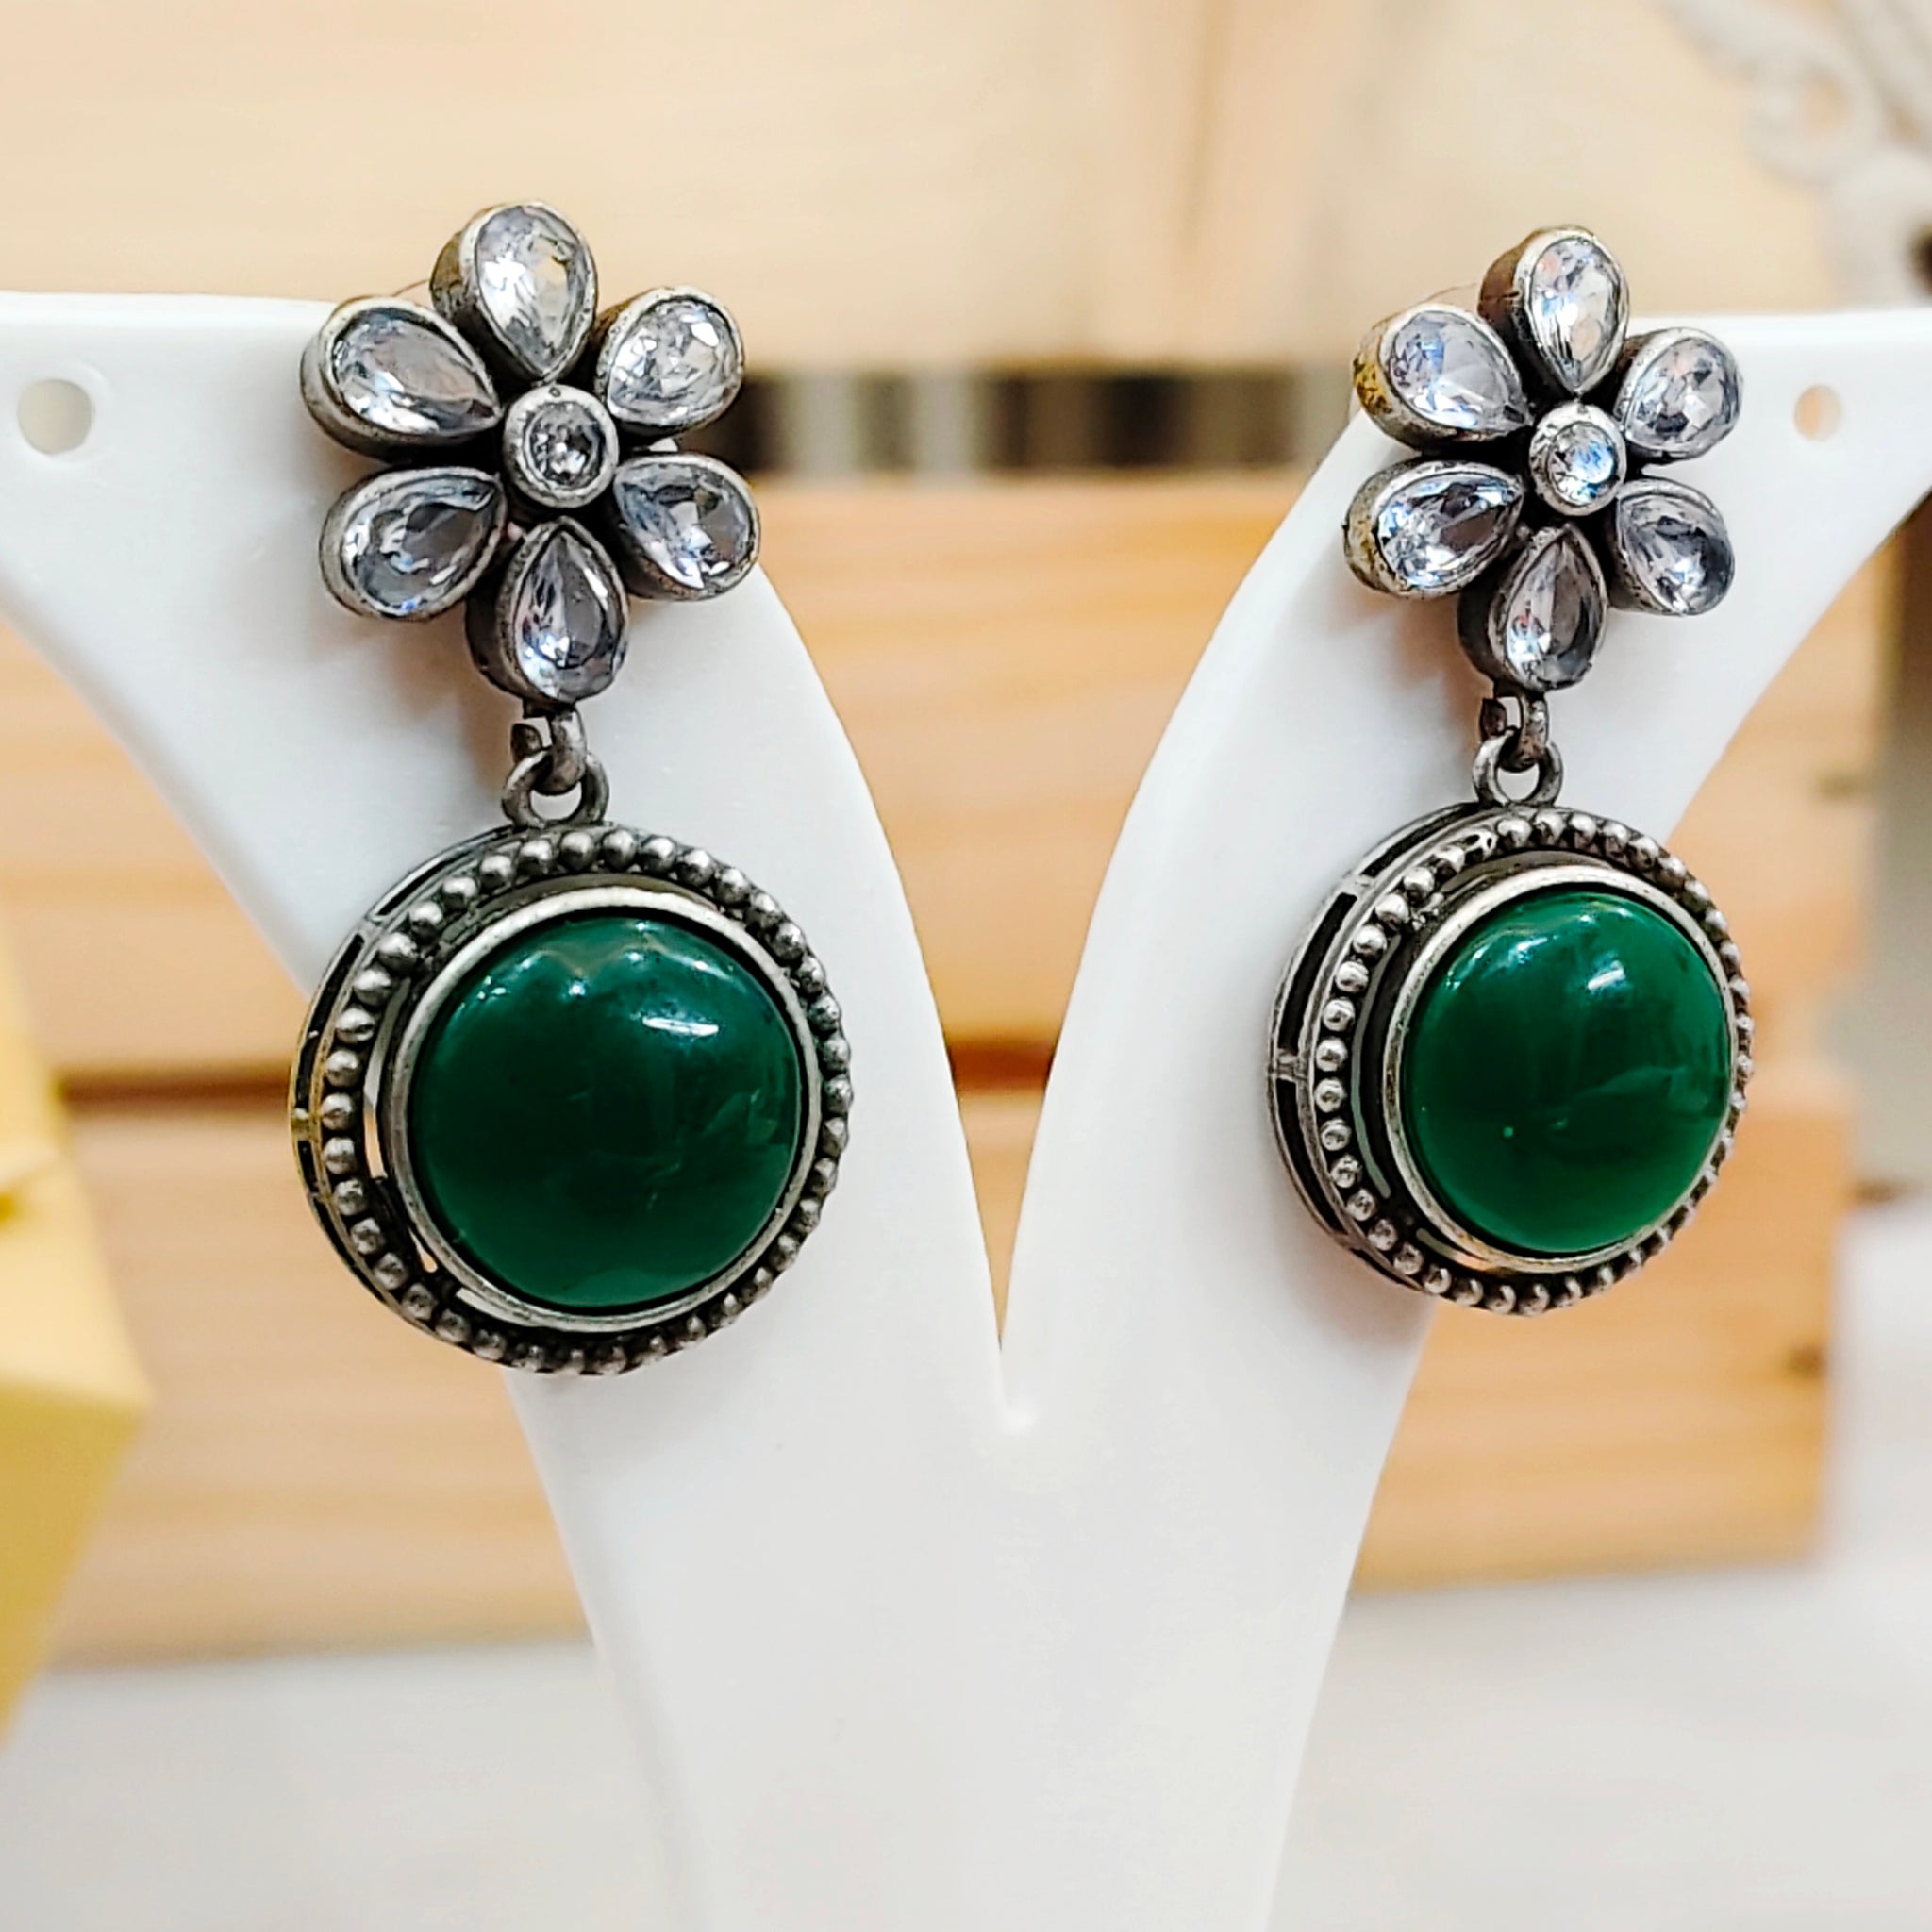 Tribhanga Earring from Mrigaya by Nandini for Festive Occasions | India Look & Wedding- Dark Green - Mrigaya India